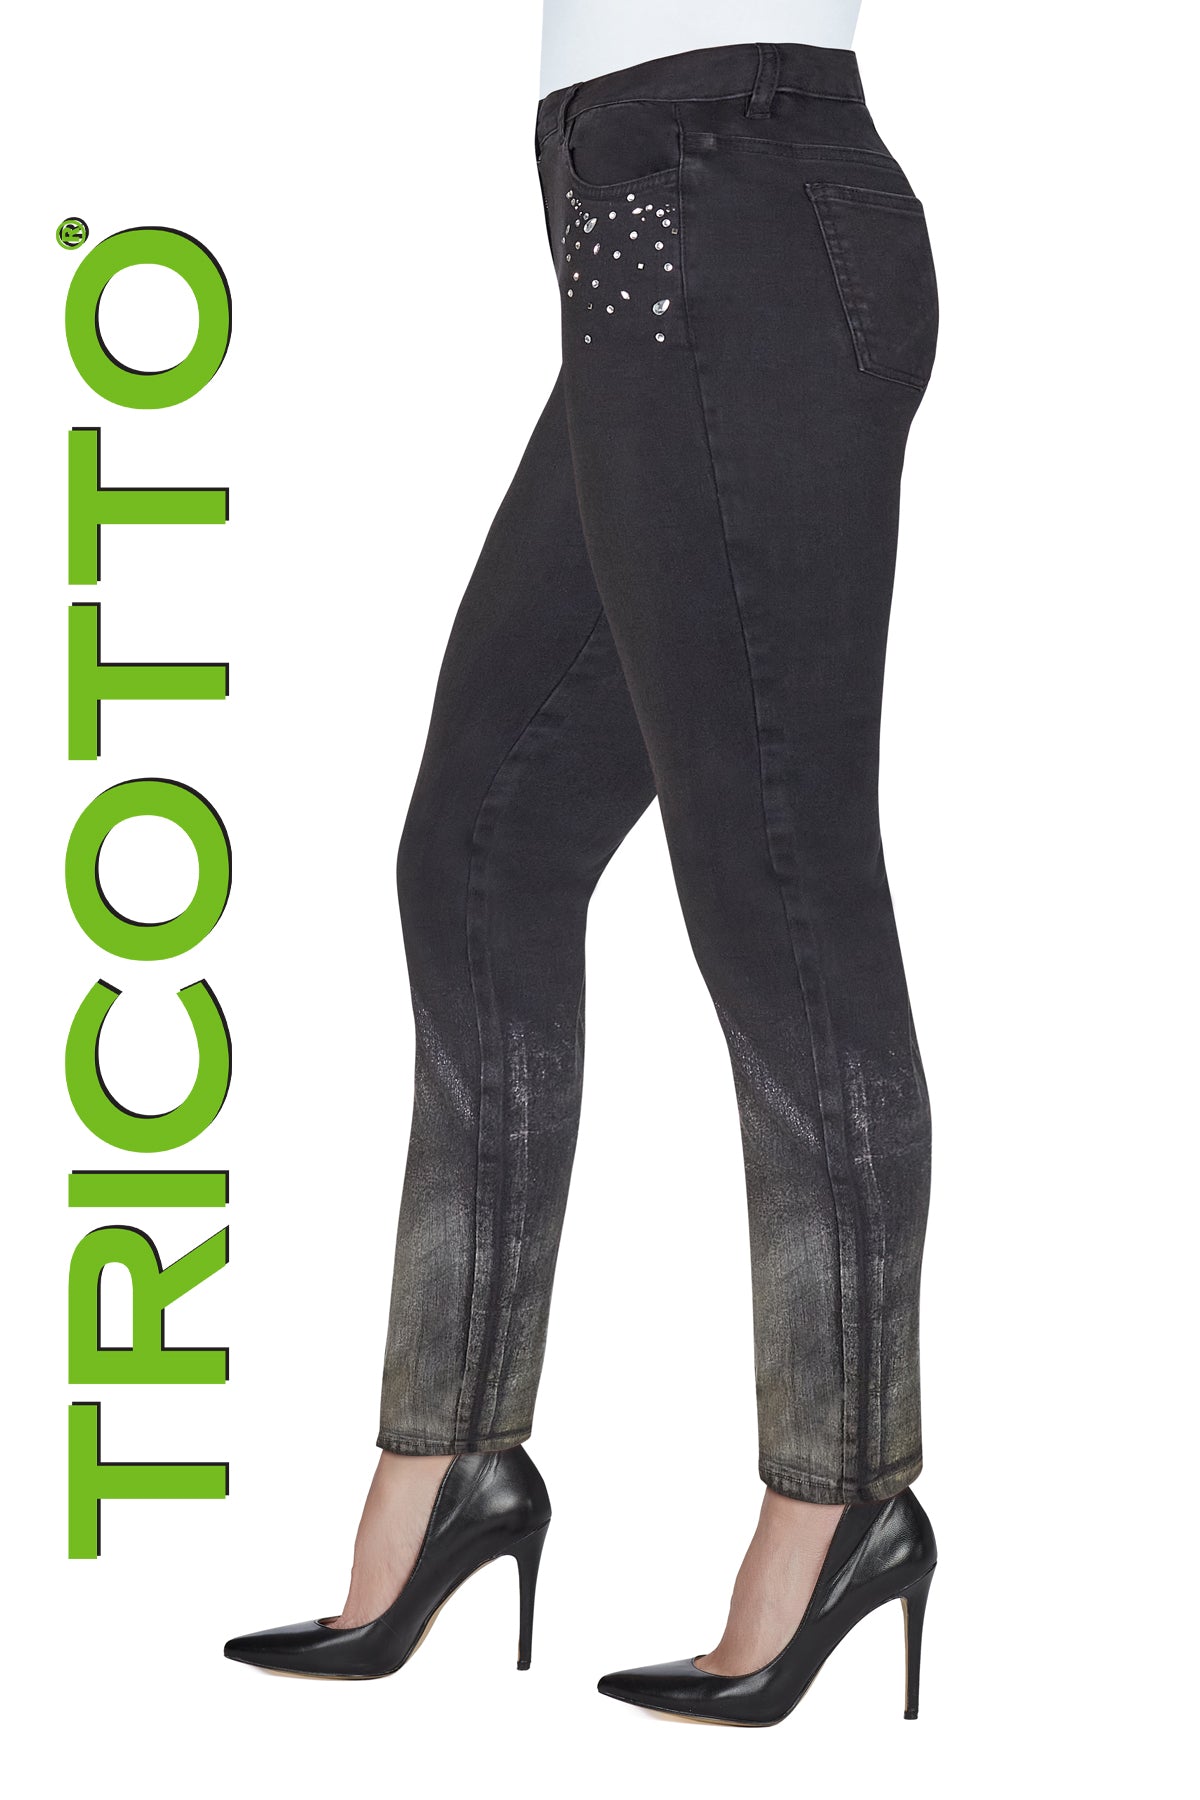 Tricotto Black Jeans-Buy Tricotto Jeans Online-Tricotto Clothing Montreal-Online Denim Shop-Black Jeans